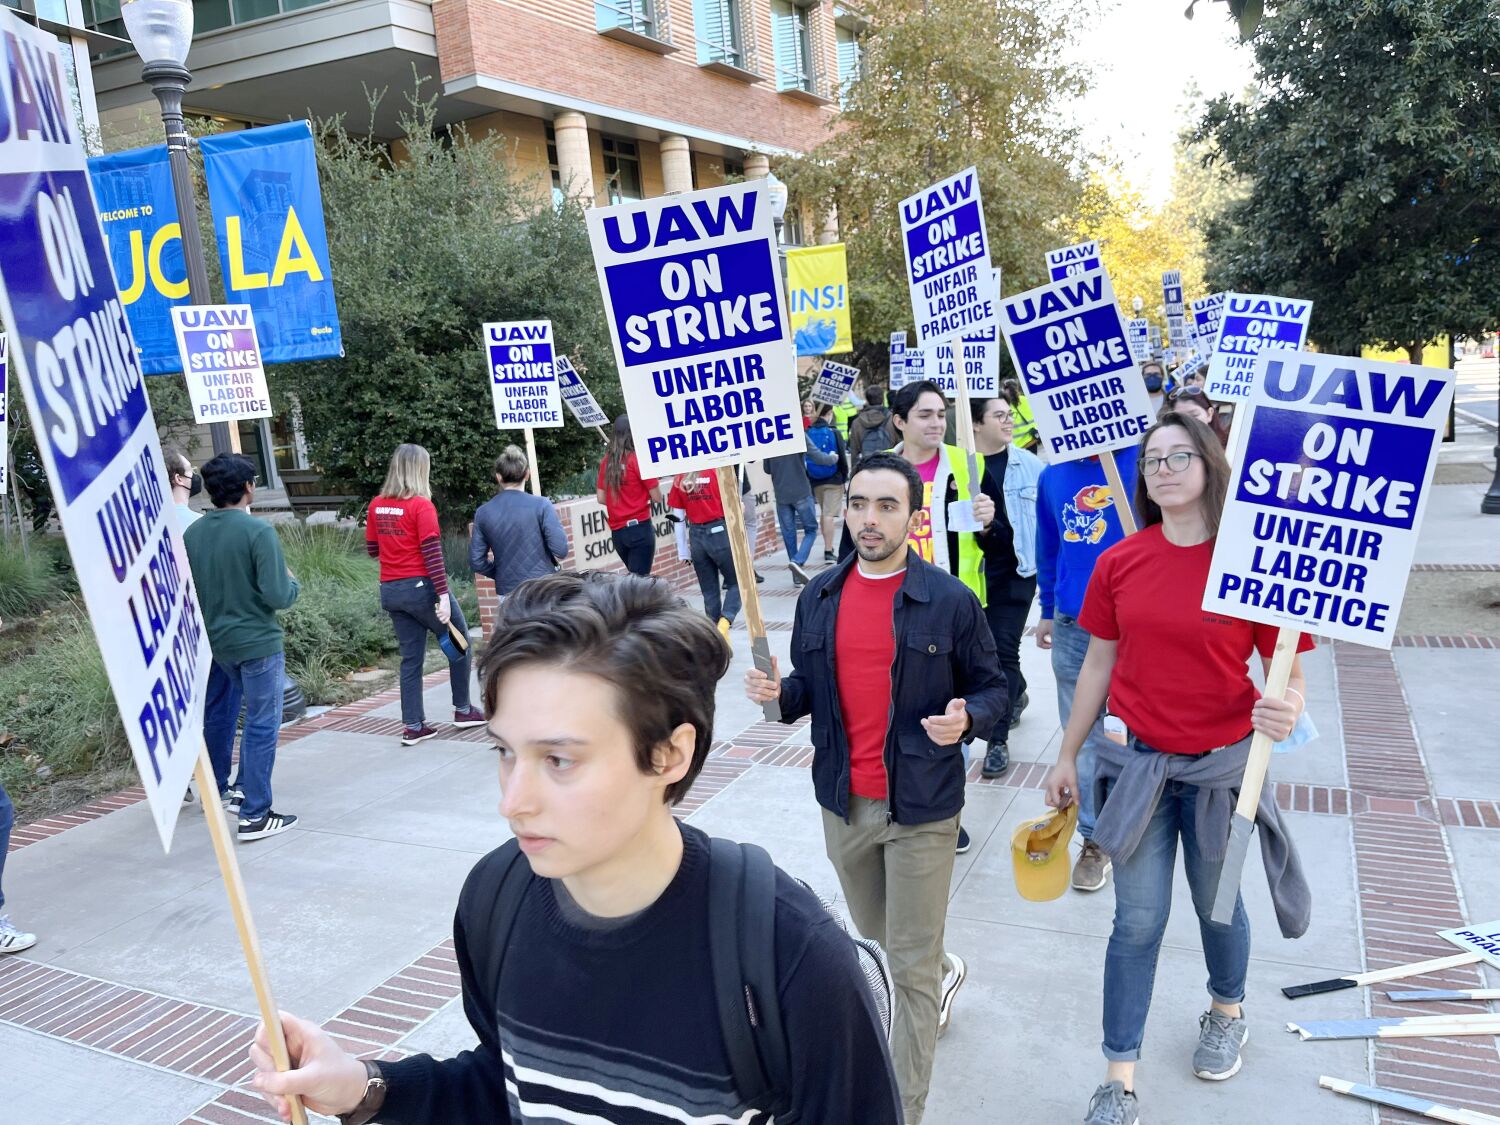 University of California's $4-billion real estate investment will worsen housing crisis, unions say